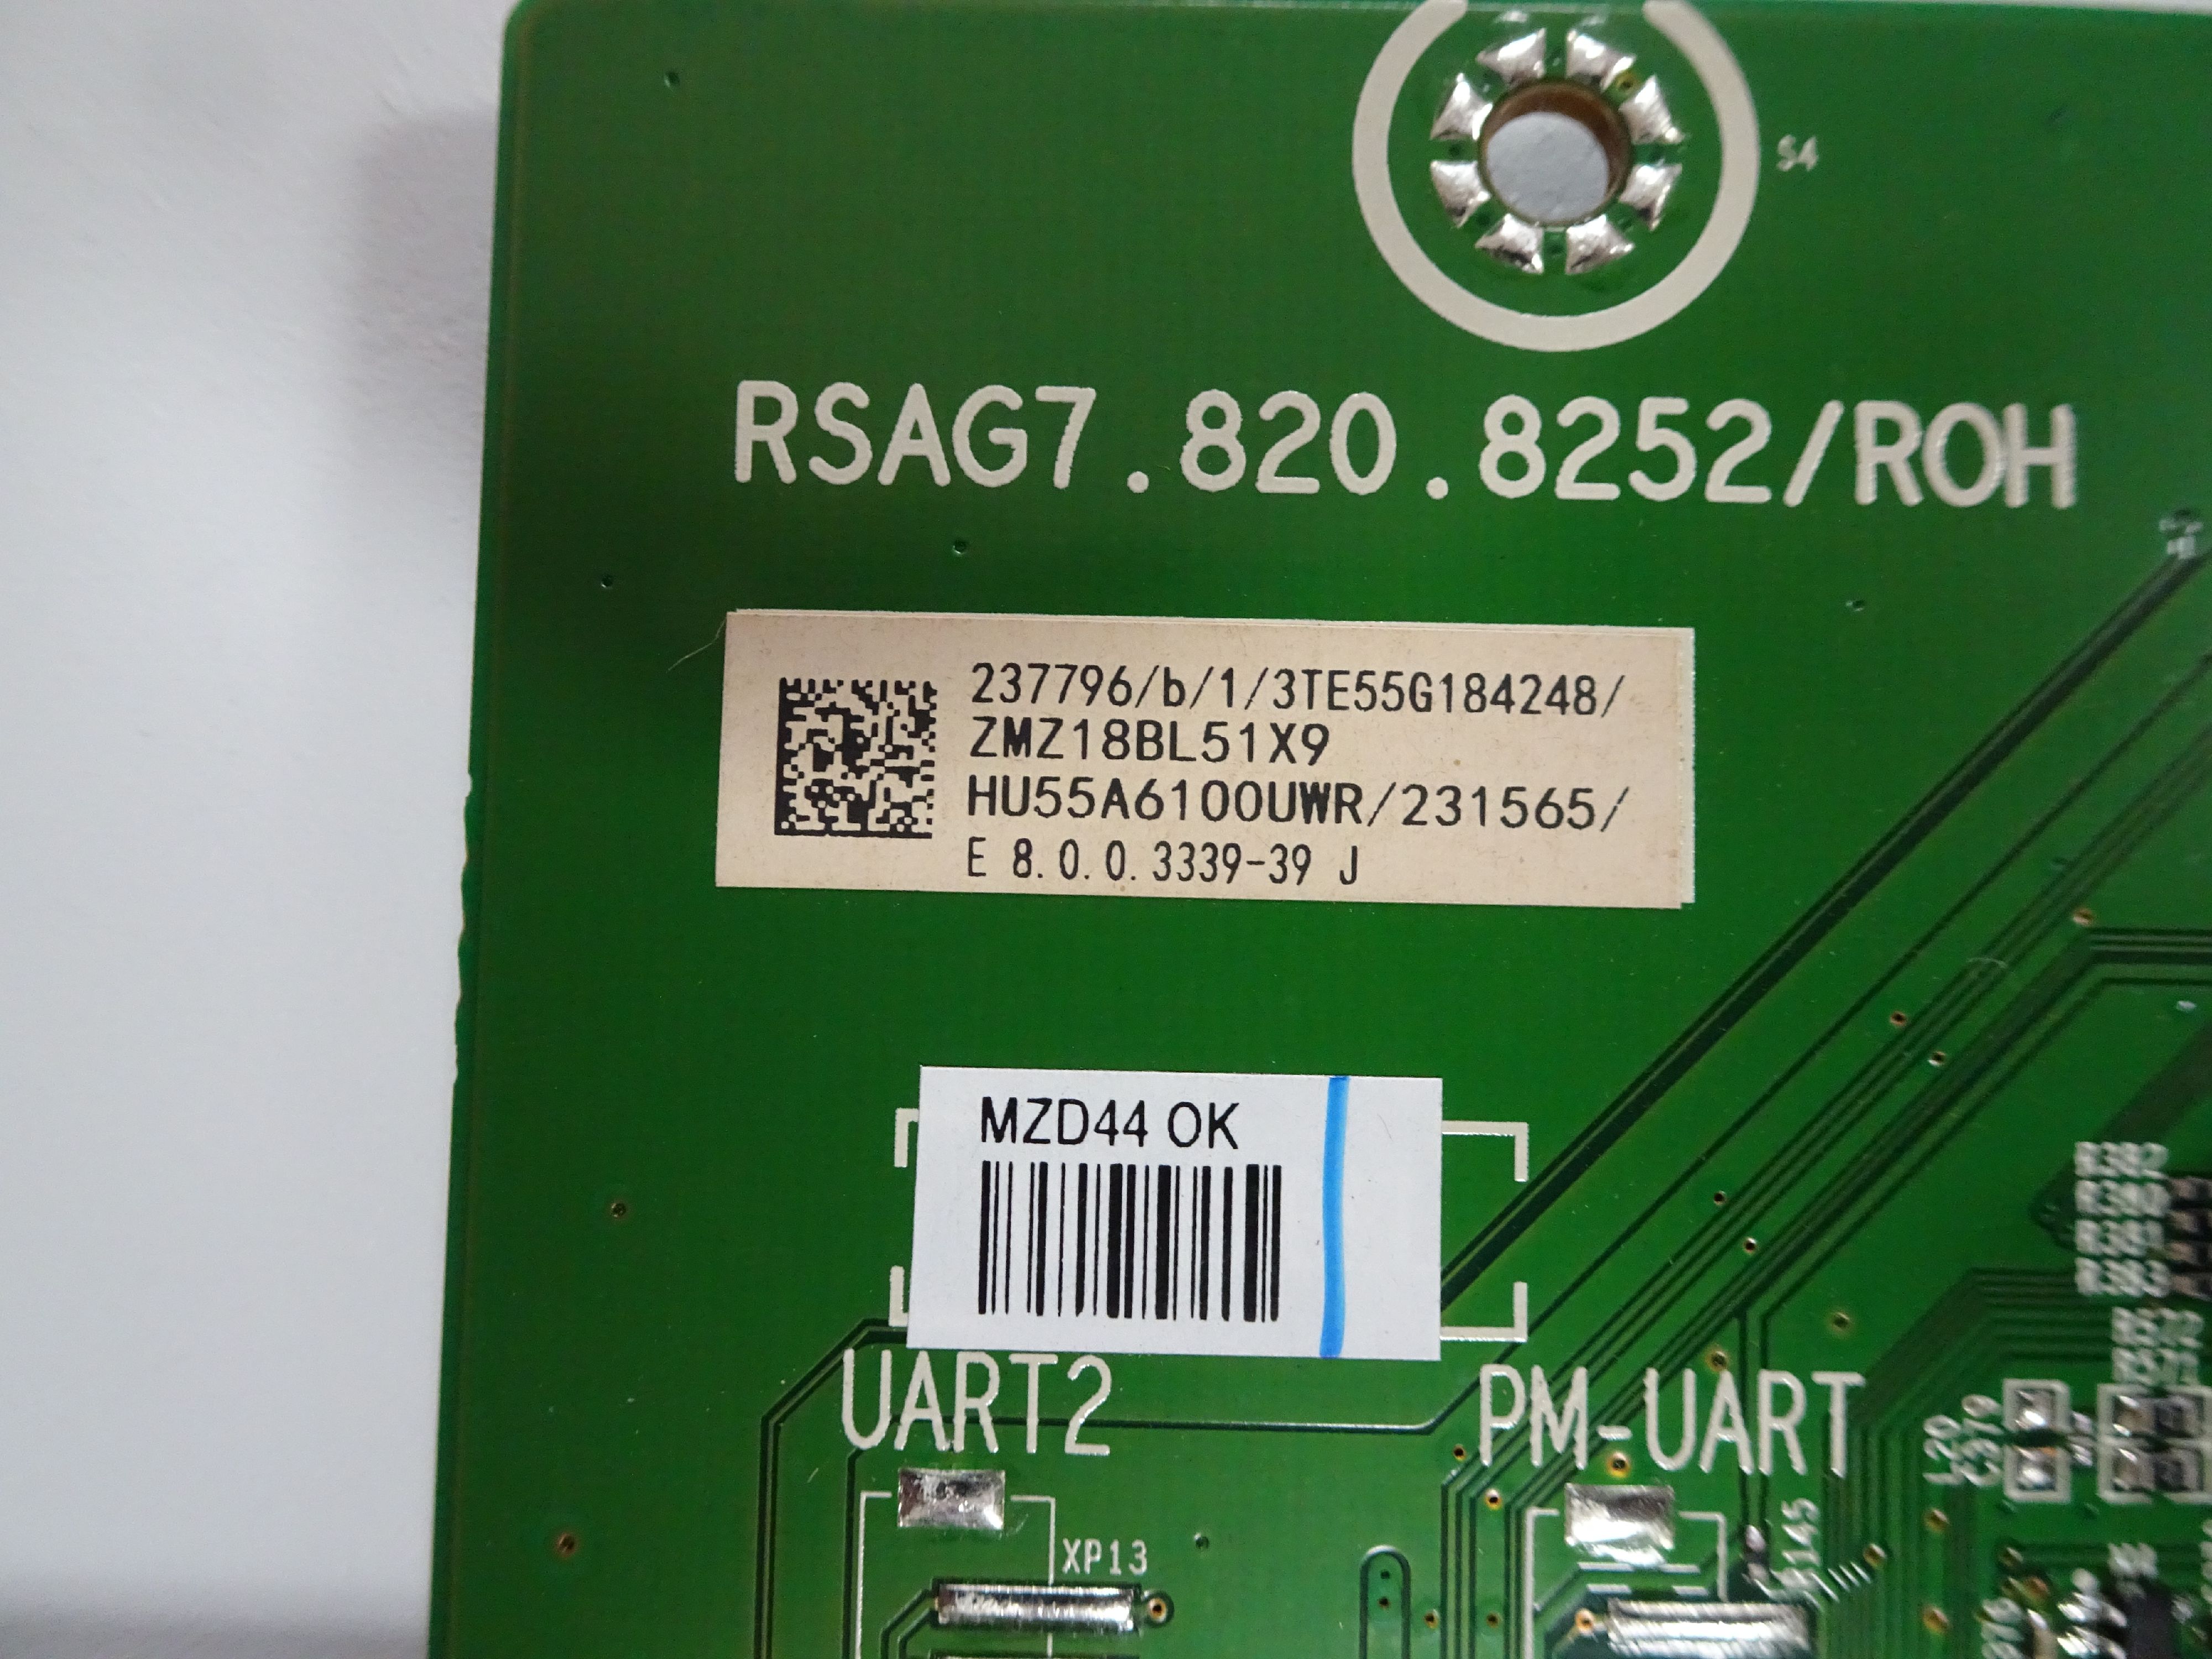 Hisense 55R6E Main Board (231565, RSAG7.820.8252/ROH) 237796 - image 2 of 2